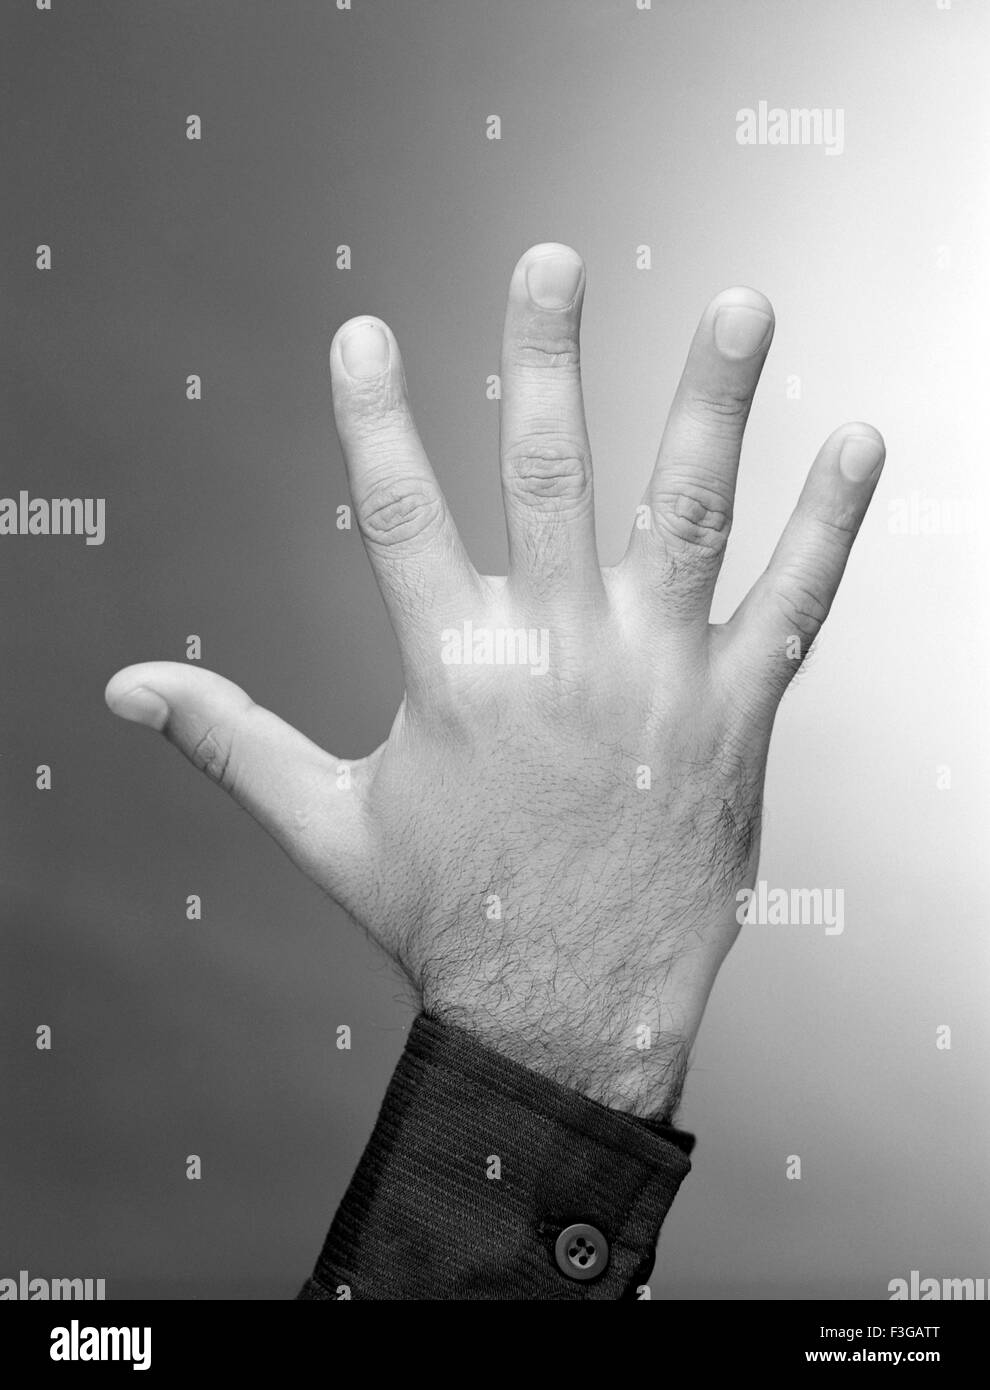 https://c8.alamy.com/comp/F3GATT/hand-back-showing-five-fingers-F3GATT.jpg